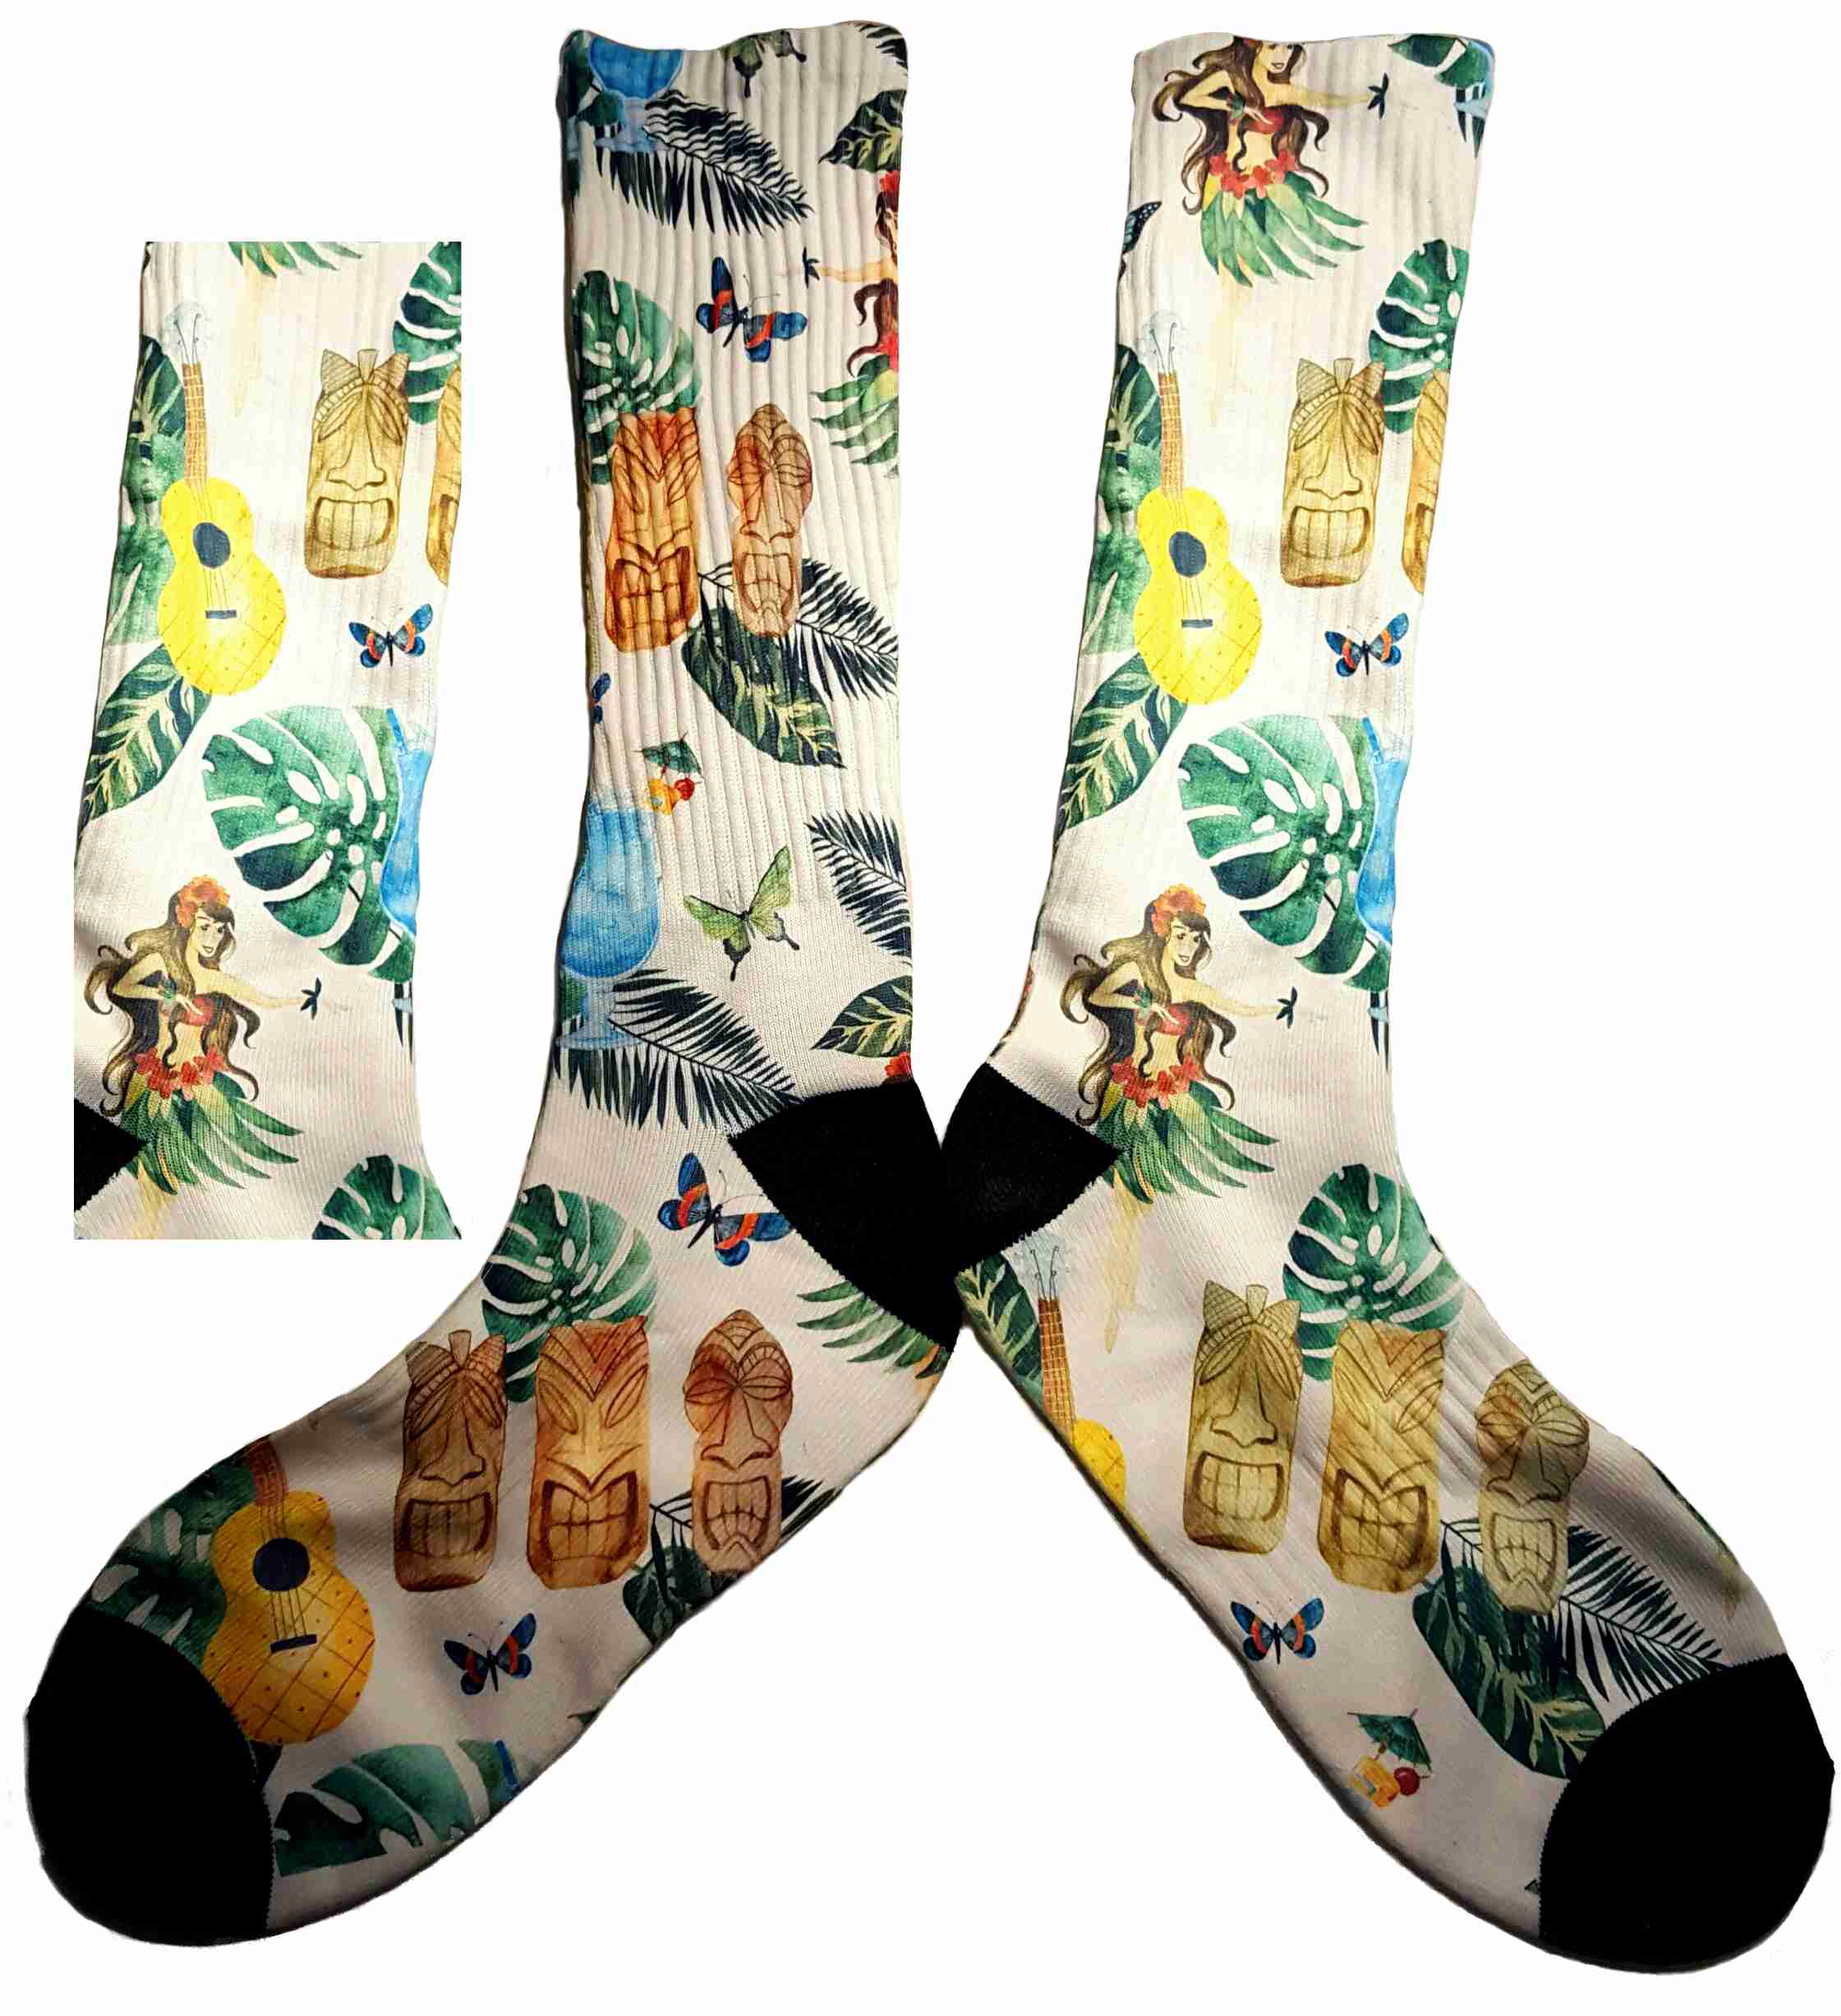 Aloha Trainer Socks made with sublimation printing